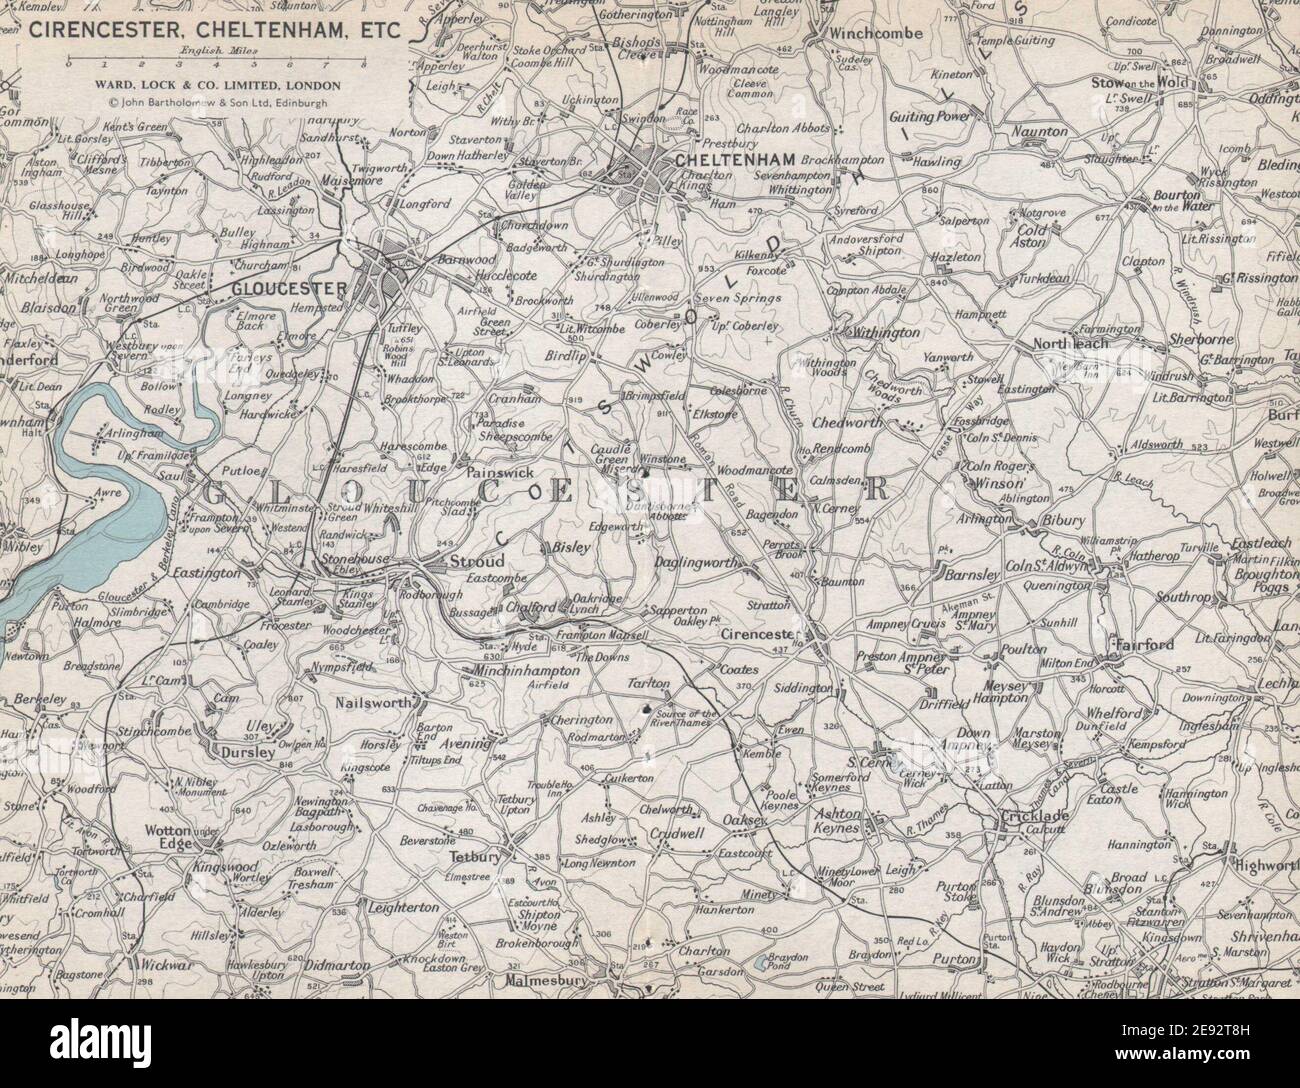 COTSWOLDS Cirencester Cheltenham Stow Bibury Gloucestershire. WARD LOCK 1967 map Stock Photo